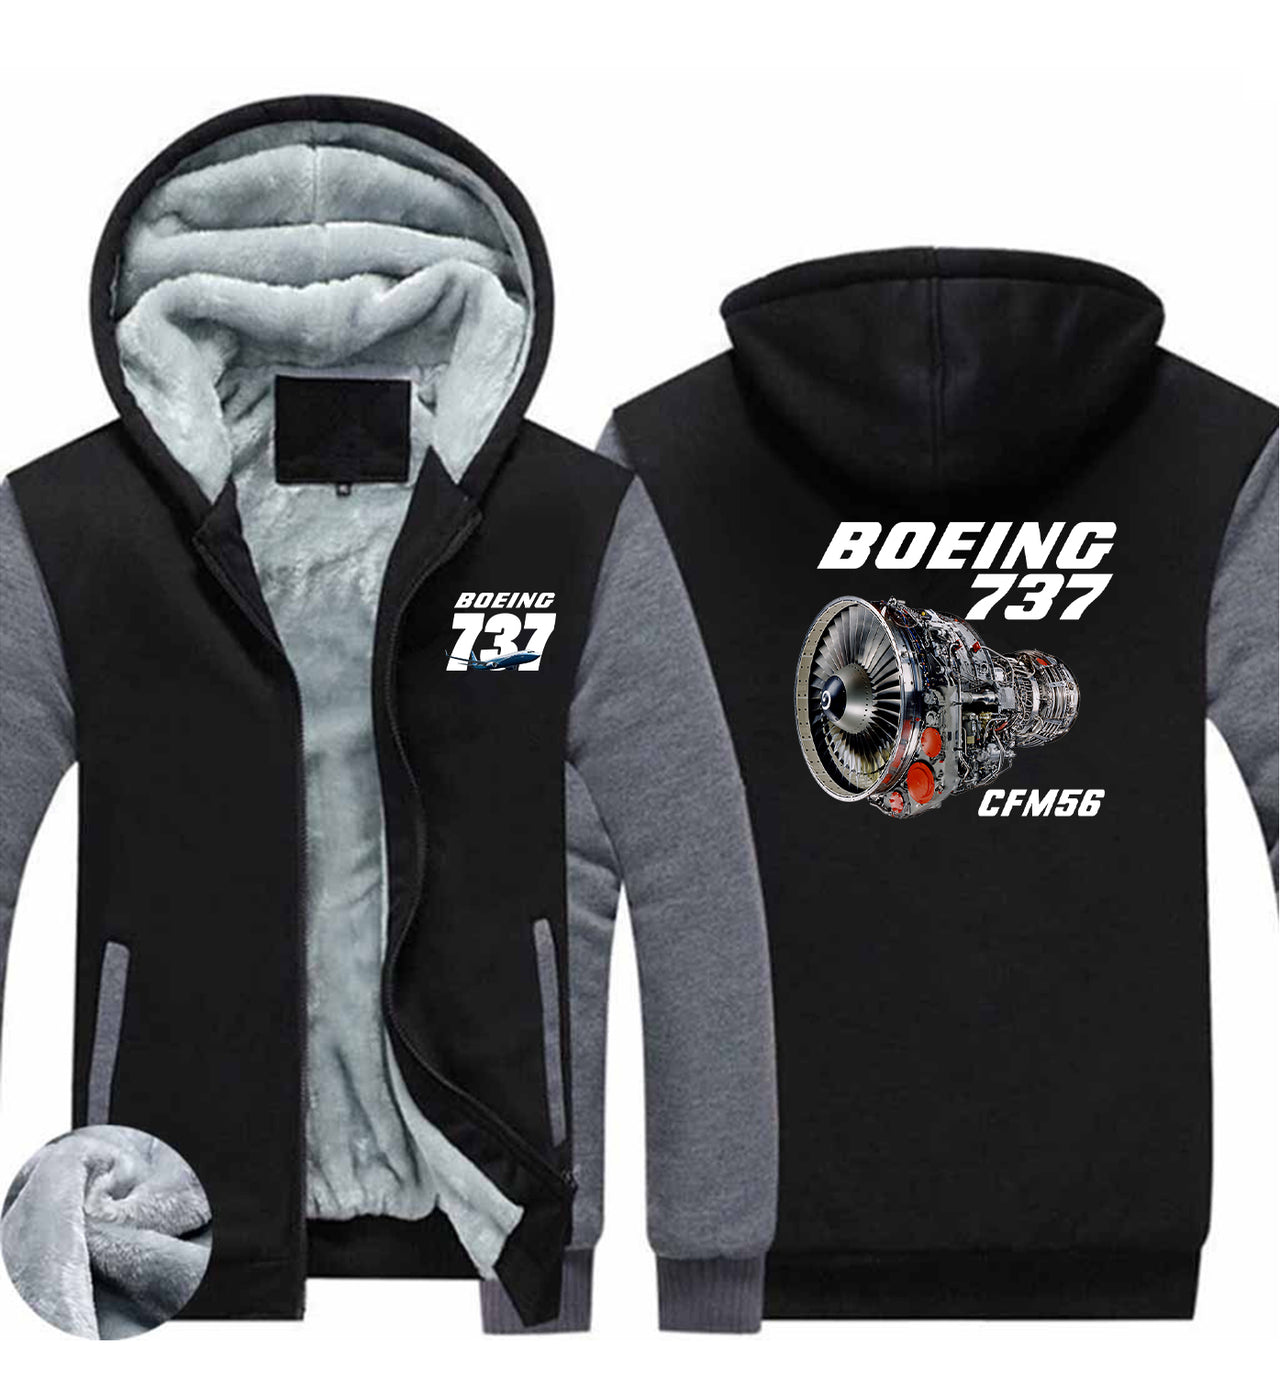 Boeing 737 Engine & CFM56 Designed Zipped Sweatshirts